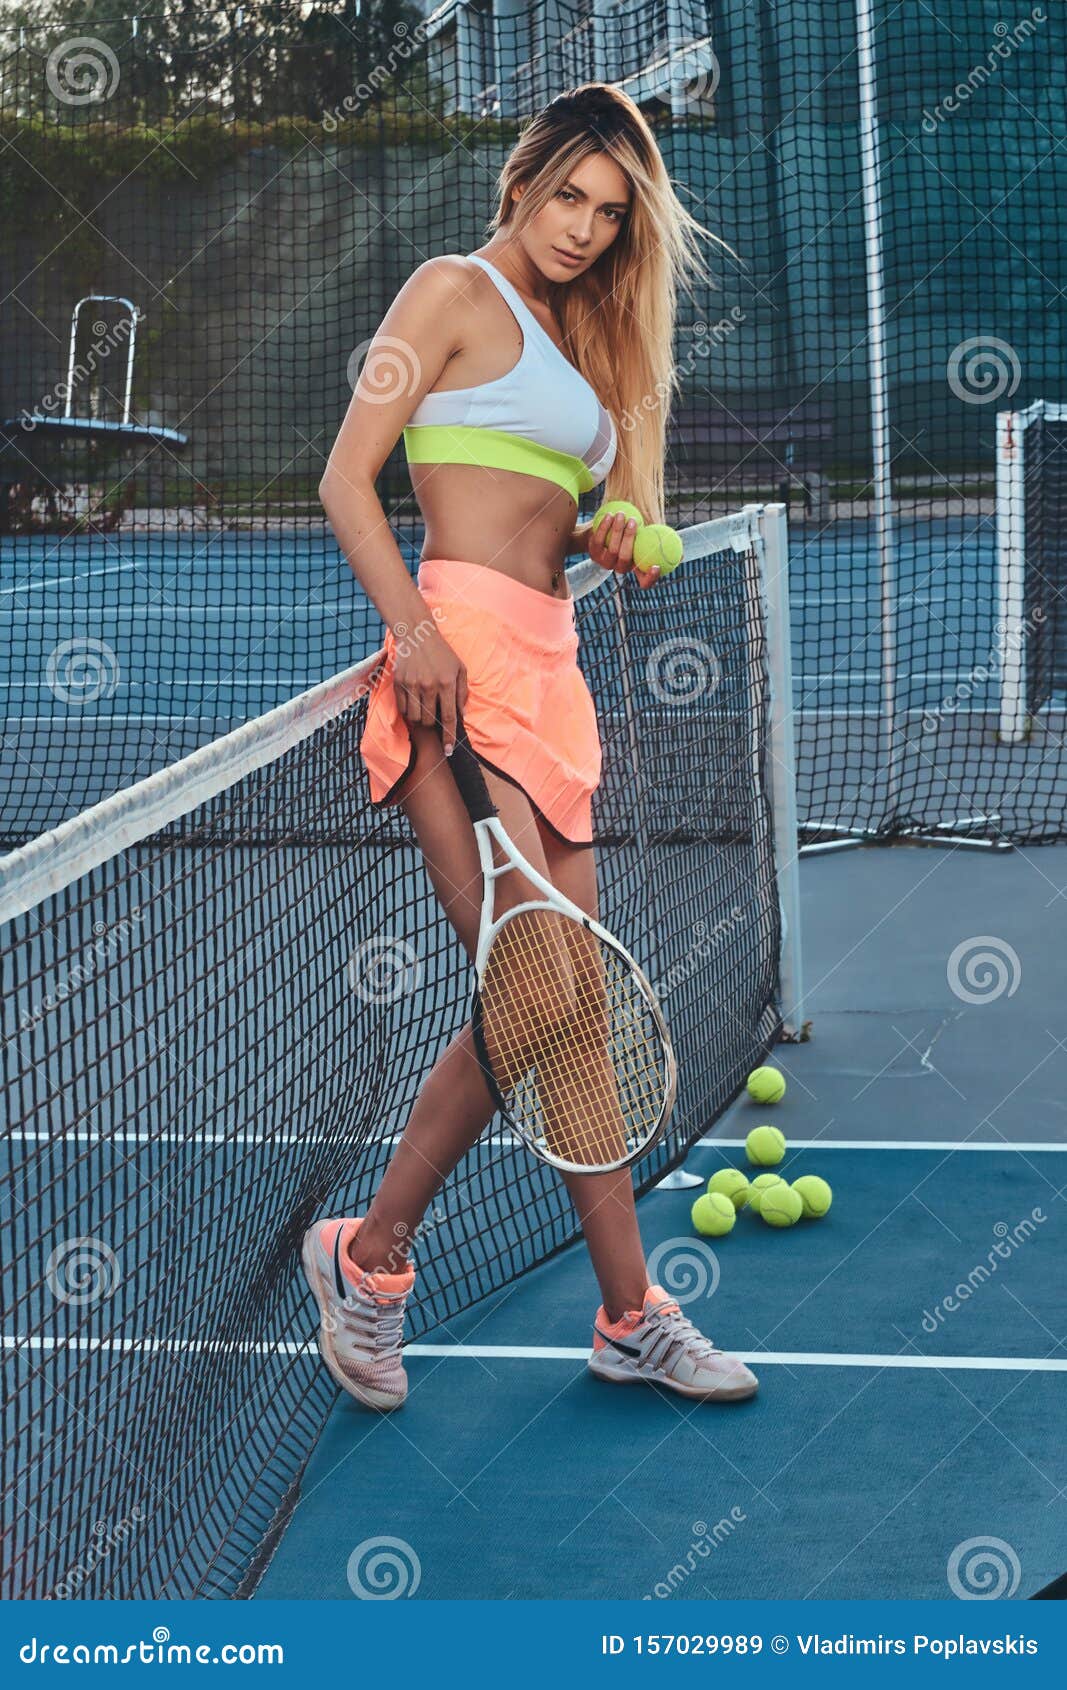 hot sexy girls tennis